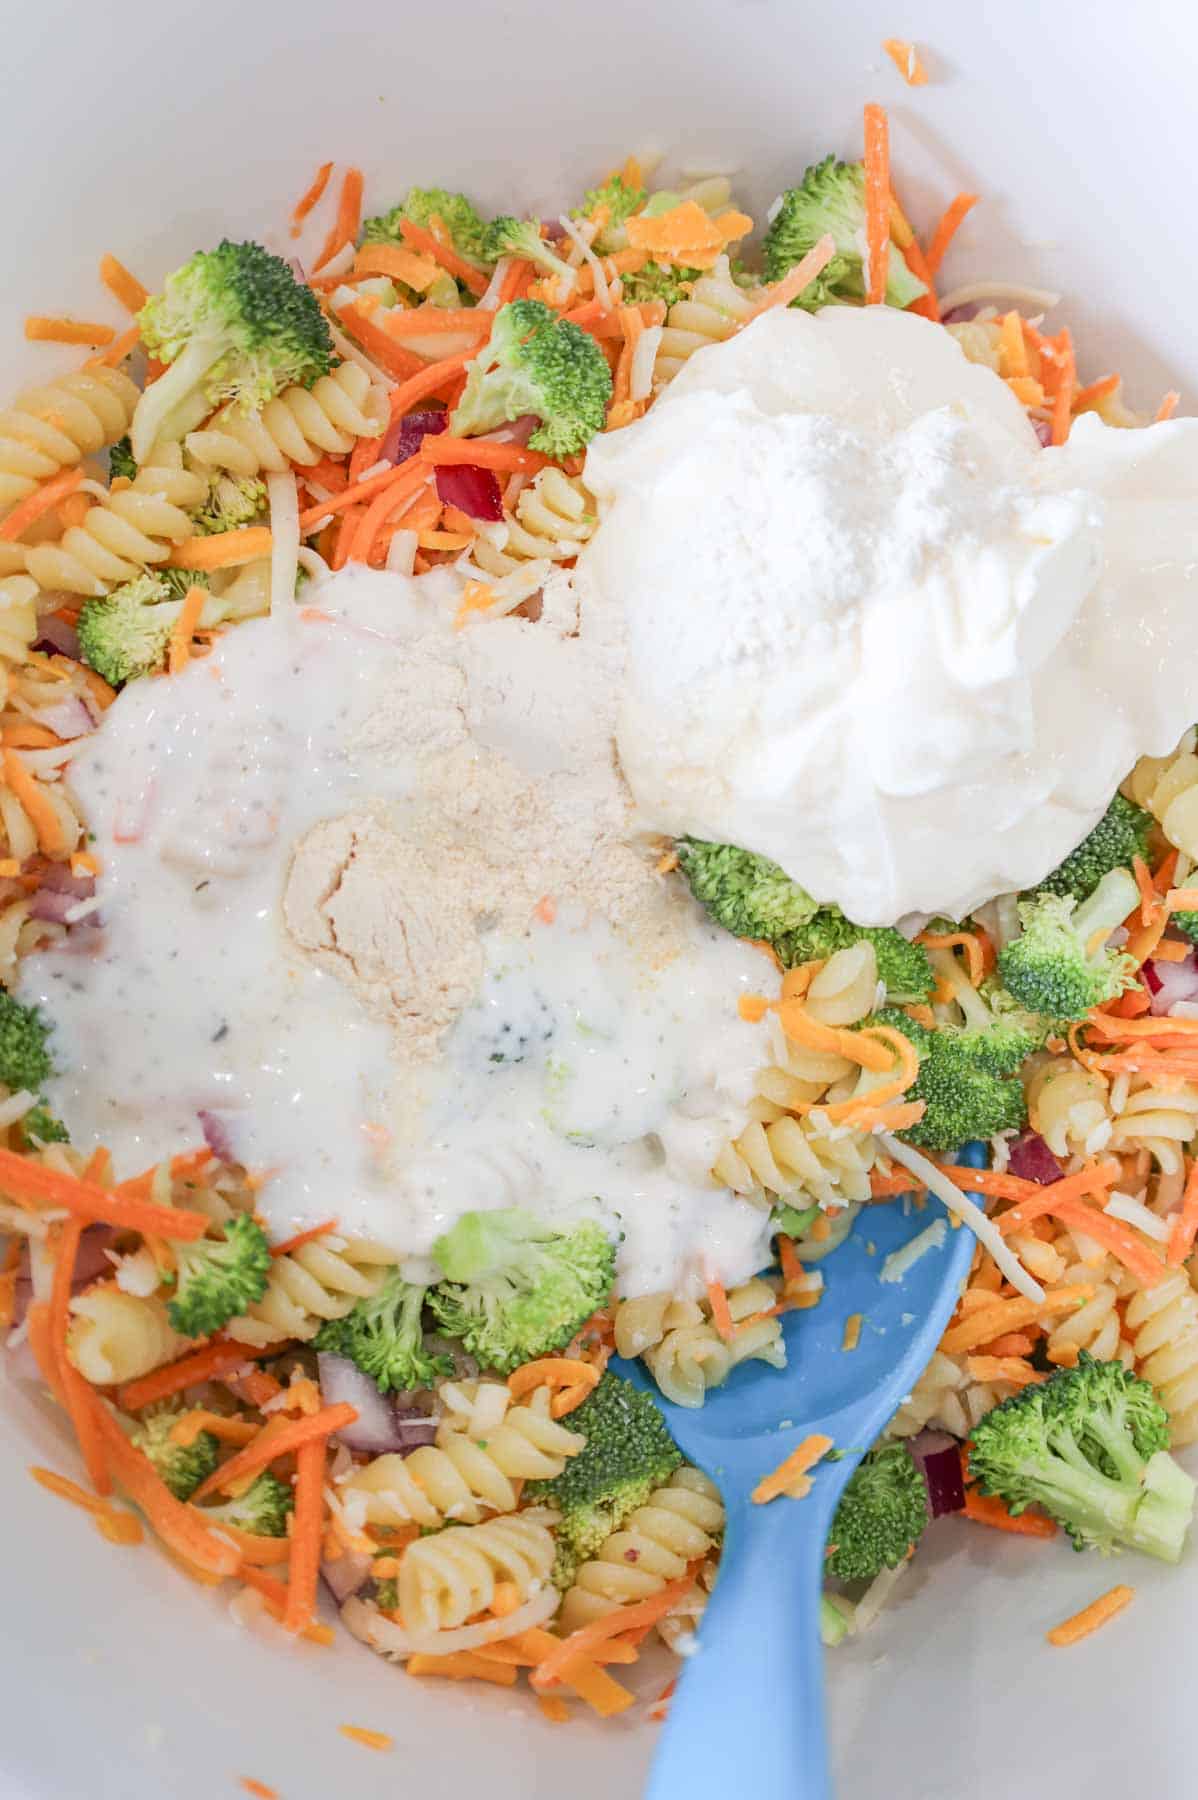 onion powder, garlic powder, mayo and ranch dressing on top of broccoli pasta salad